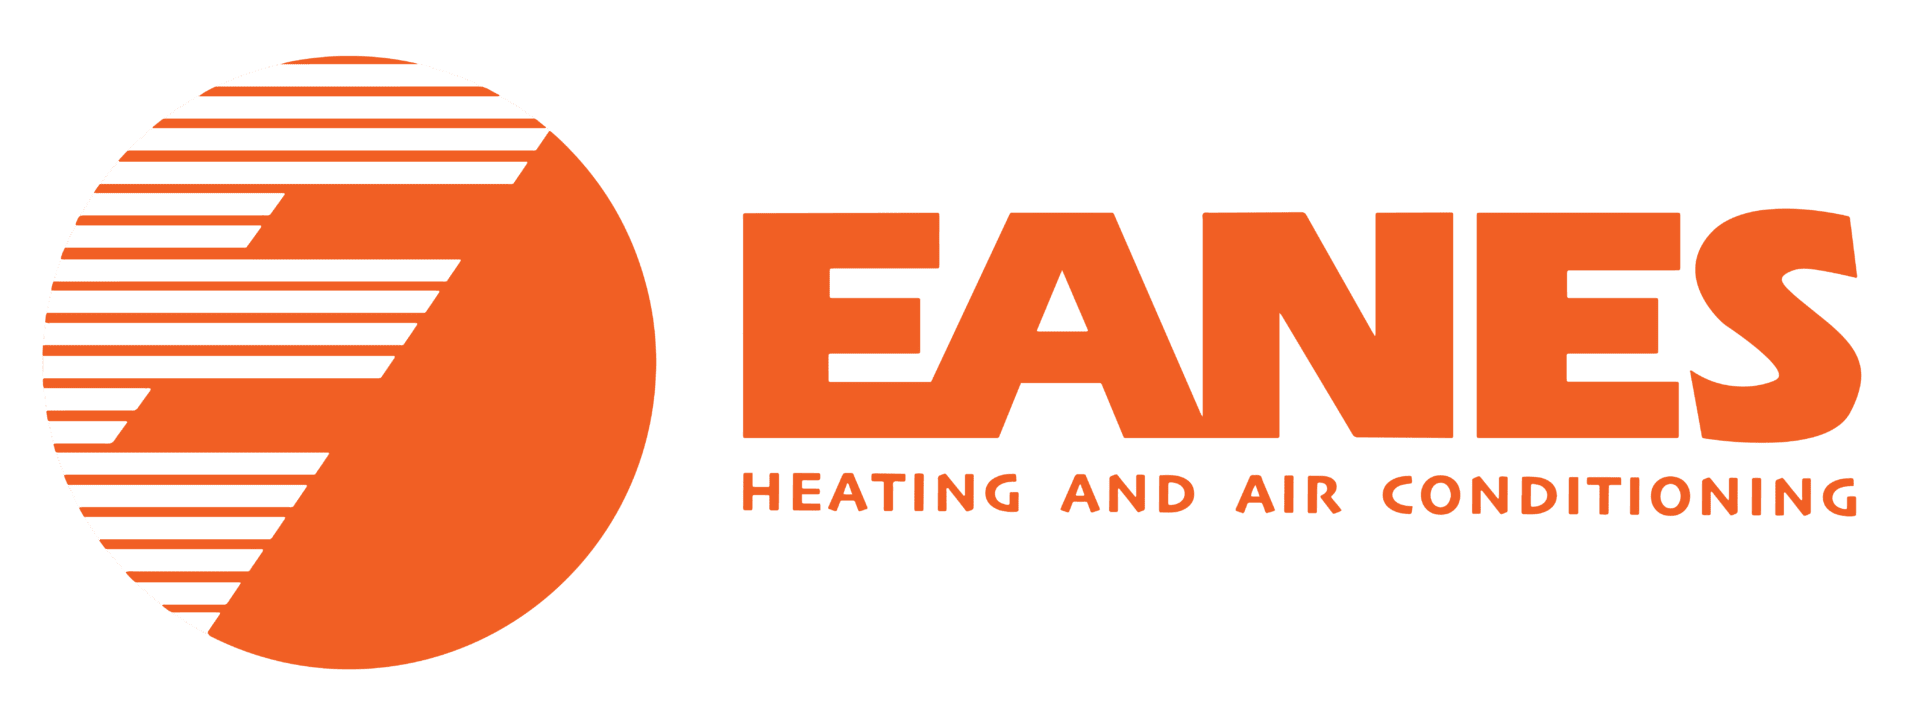 $69 Heater Tune-up + No Breakdown Guarantee | Eanes Heating & Air